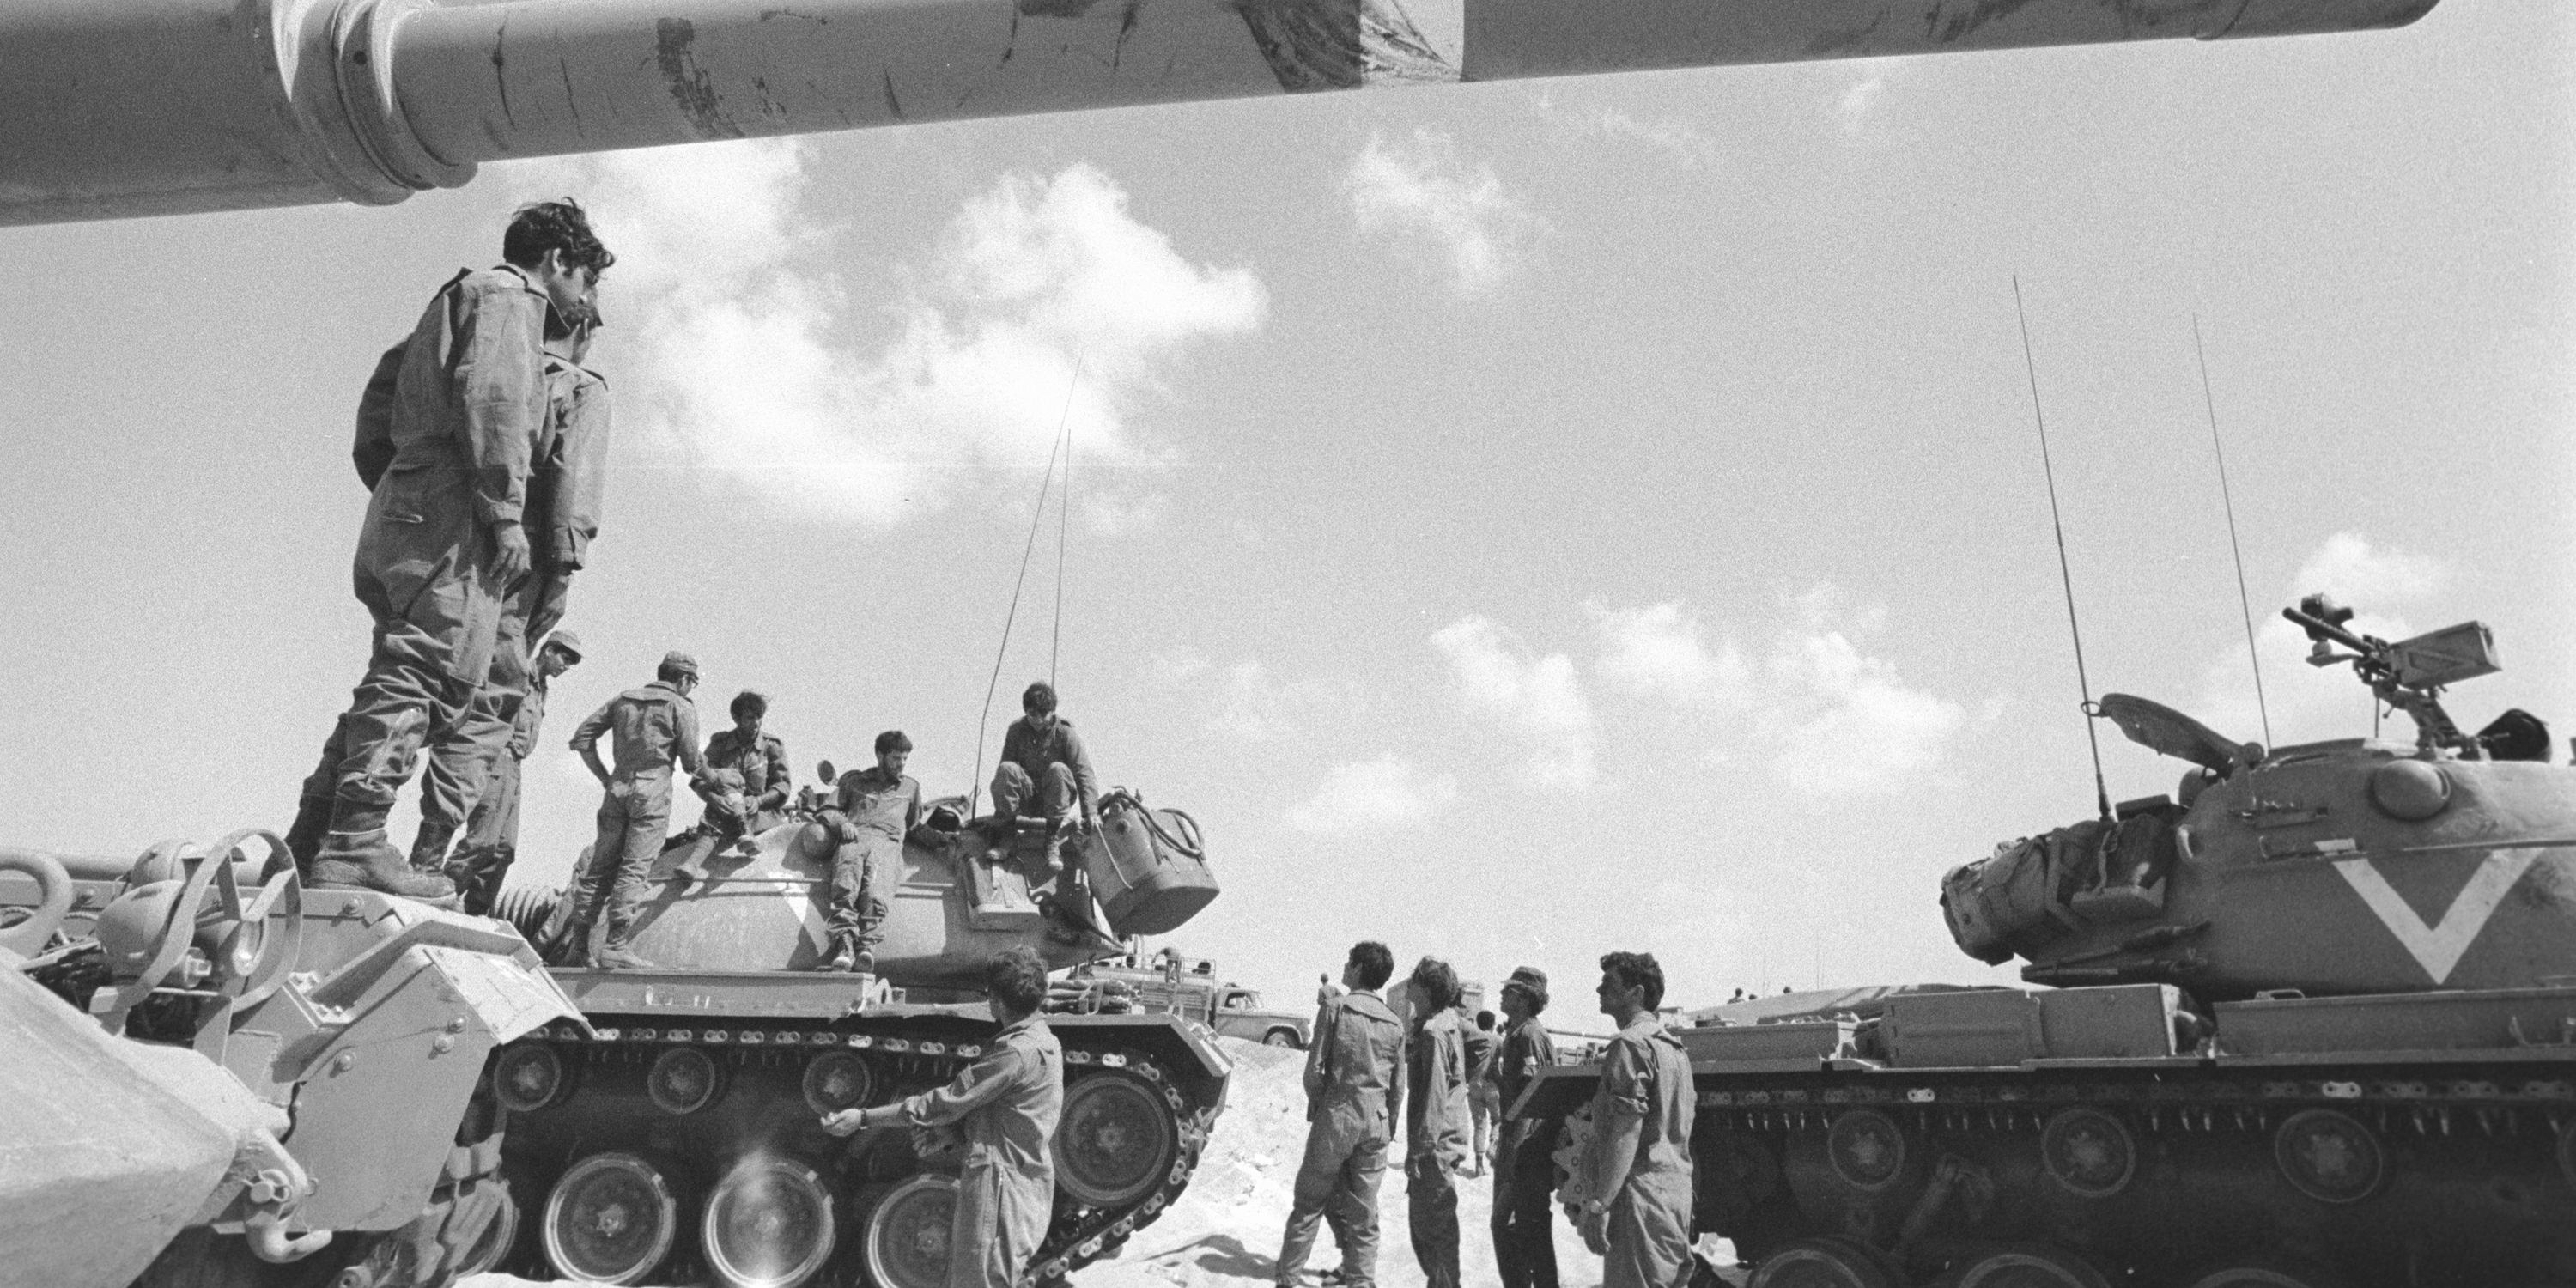 Israeli soldiers stand around their tanks during the Yom Kippur War.